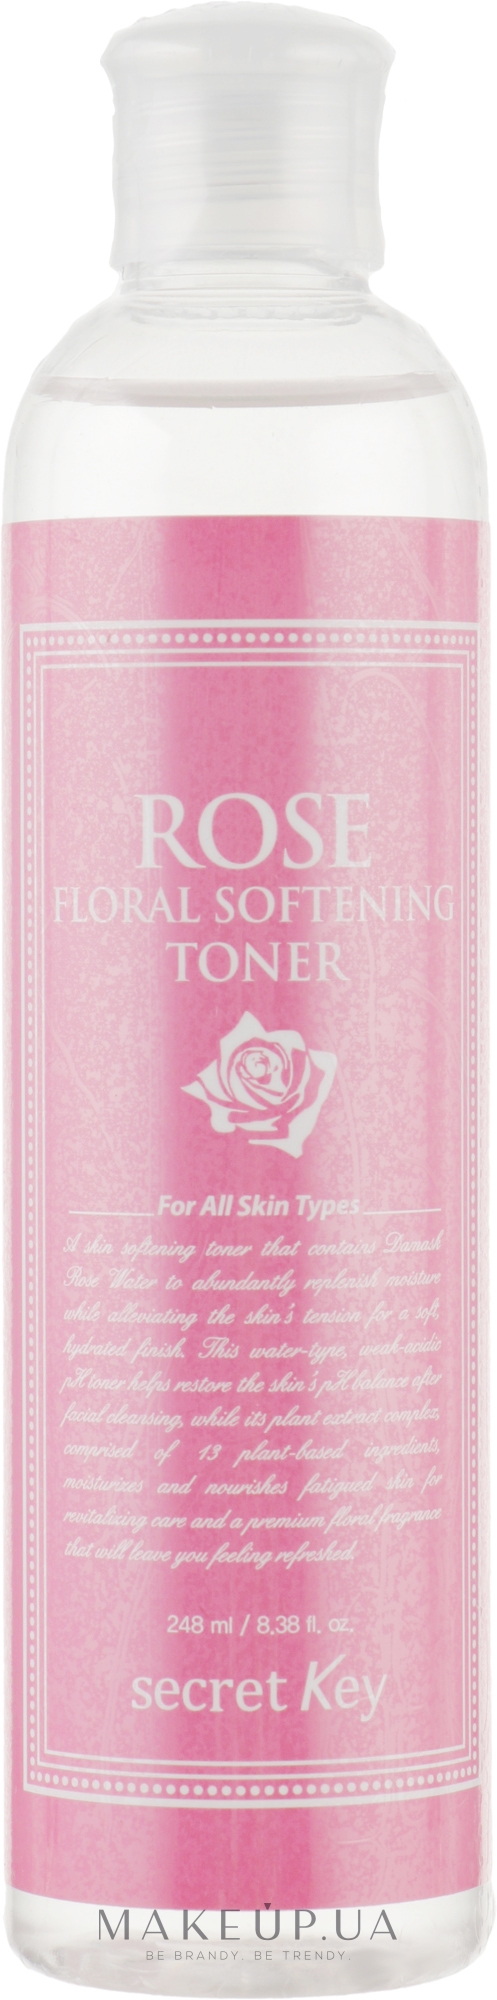 Тонизирующий тонер для лица - Secret Key Rose Floral Softening Toner — фото 248ml